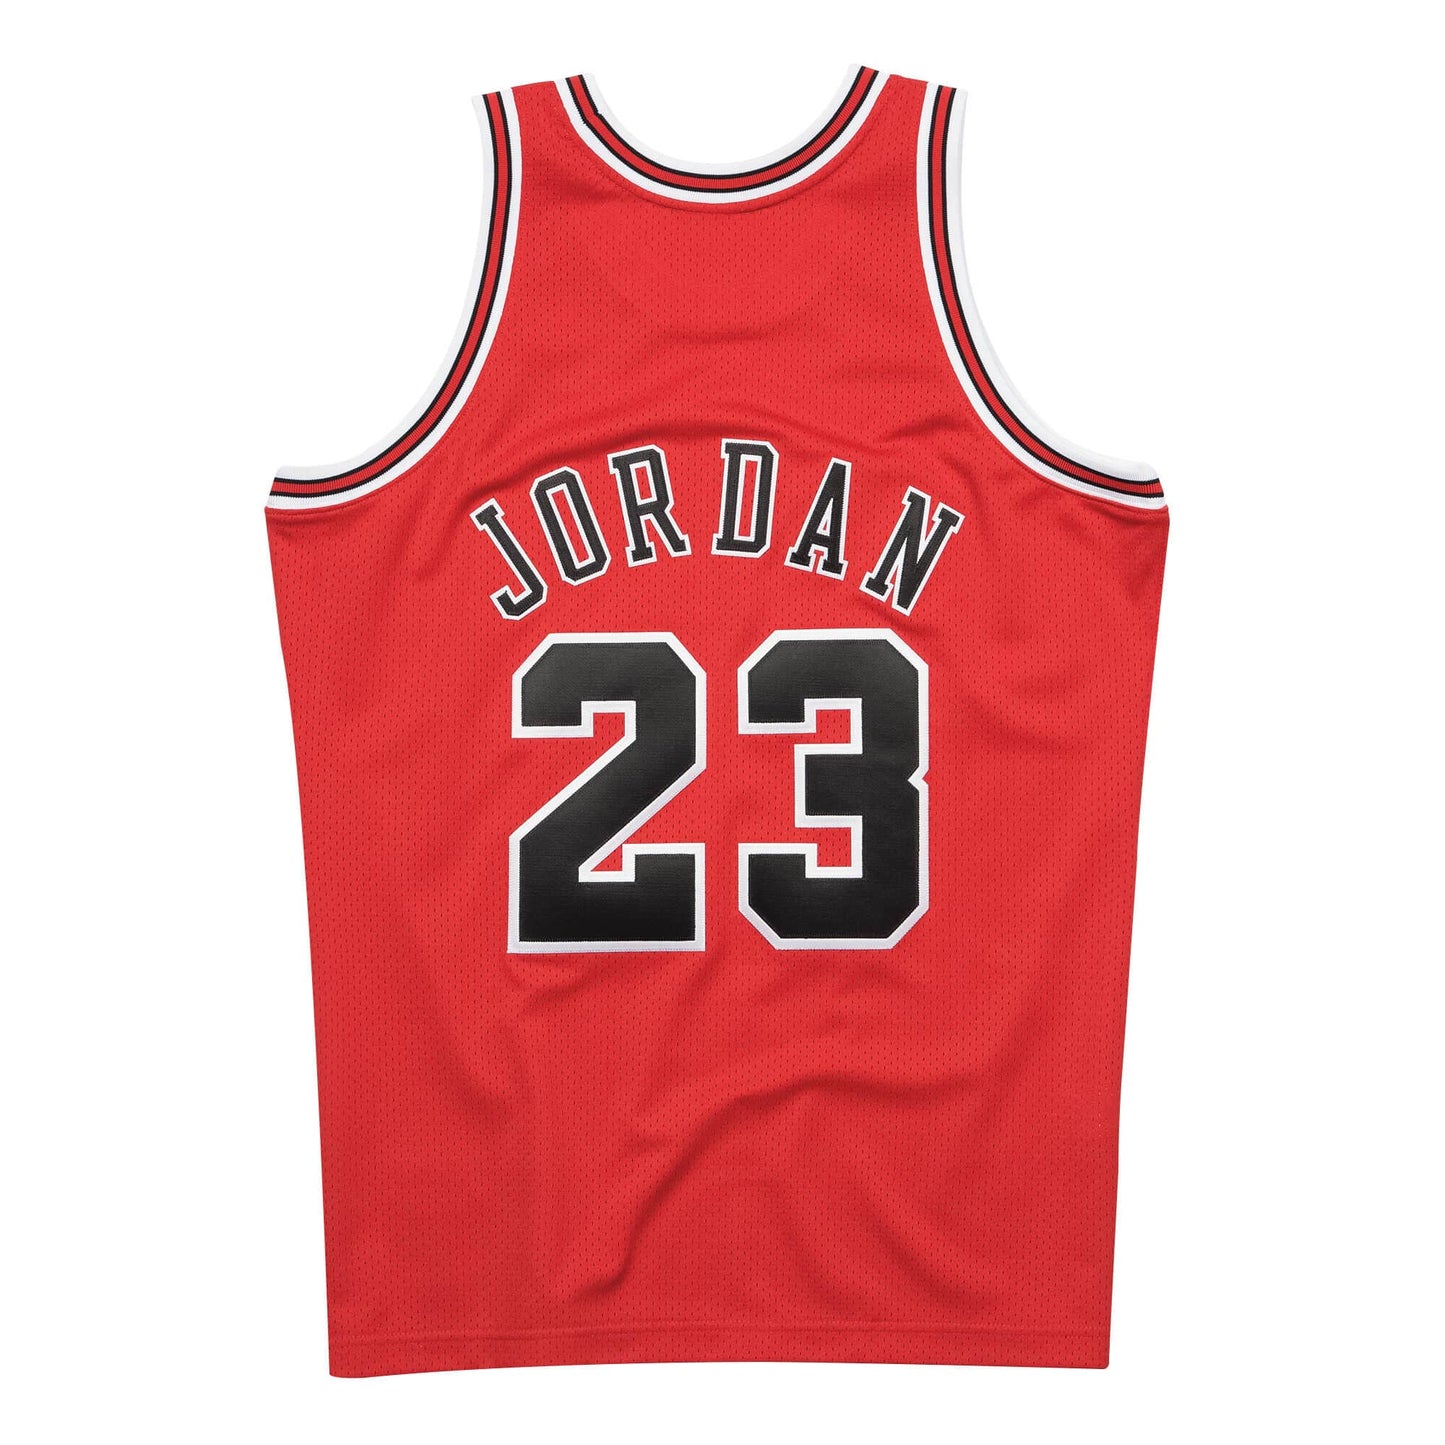 NBA Authentic Jersey Chicago Bulls 1997-98 Michael Jordan